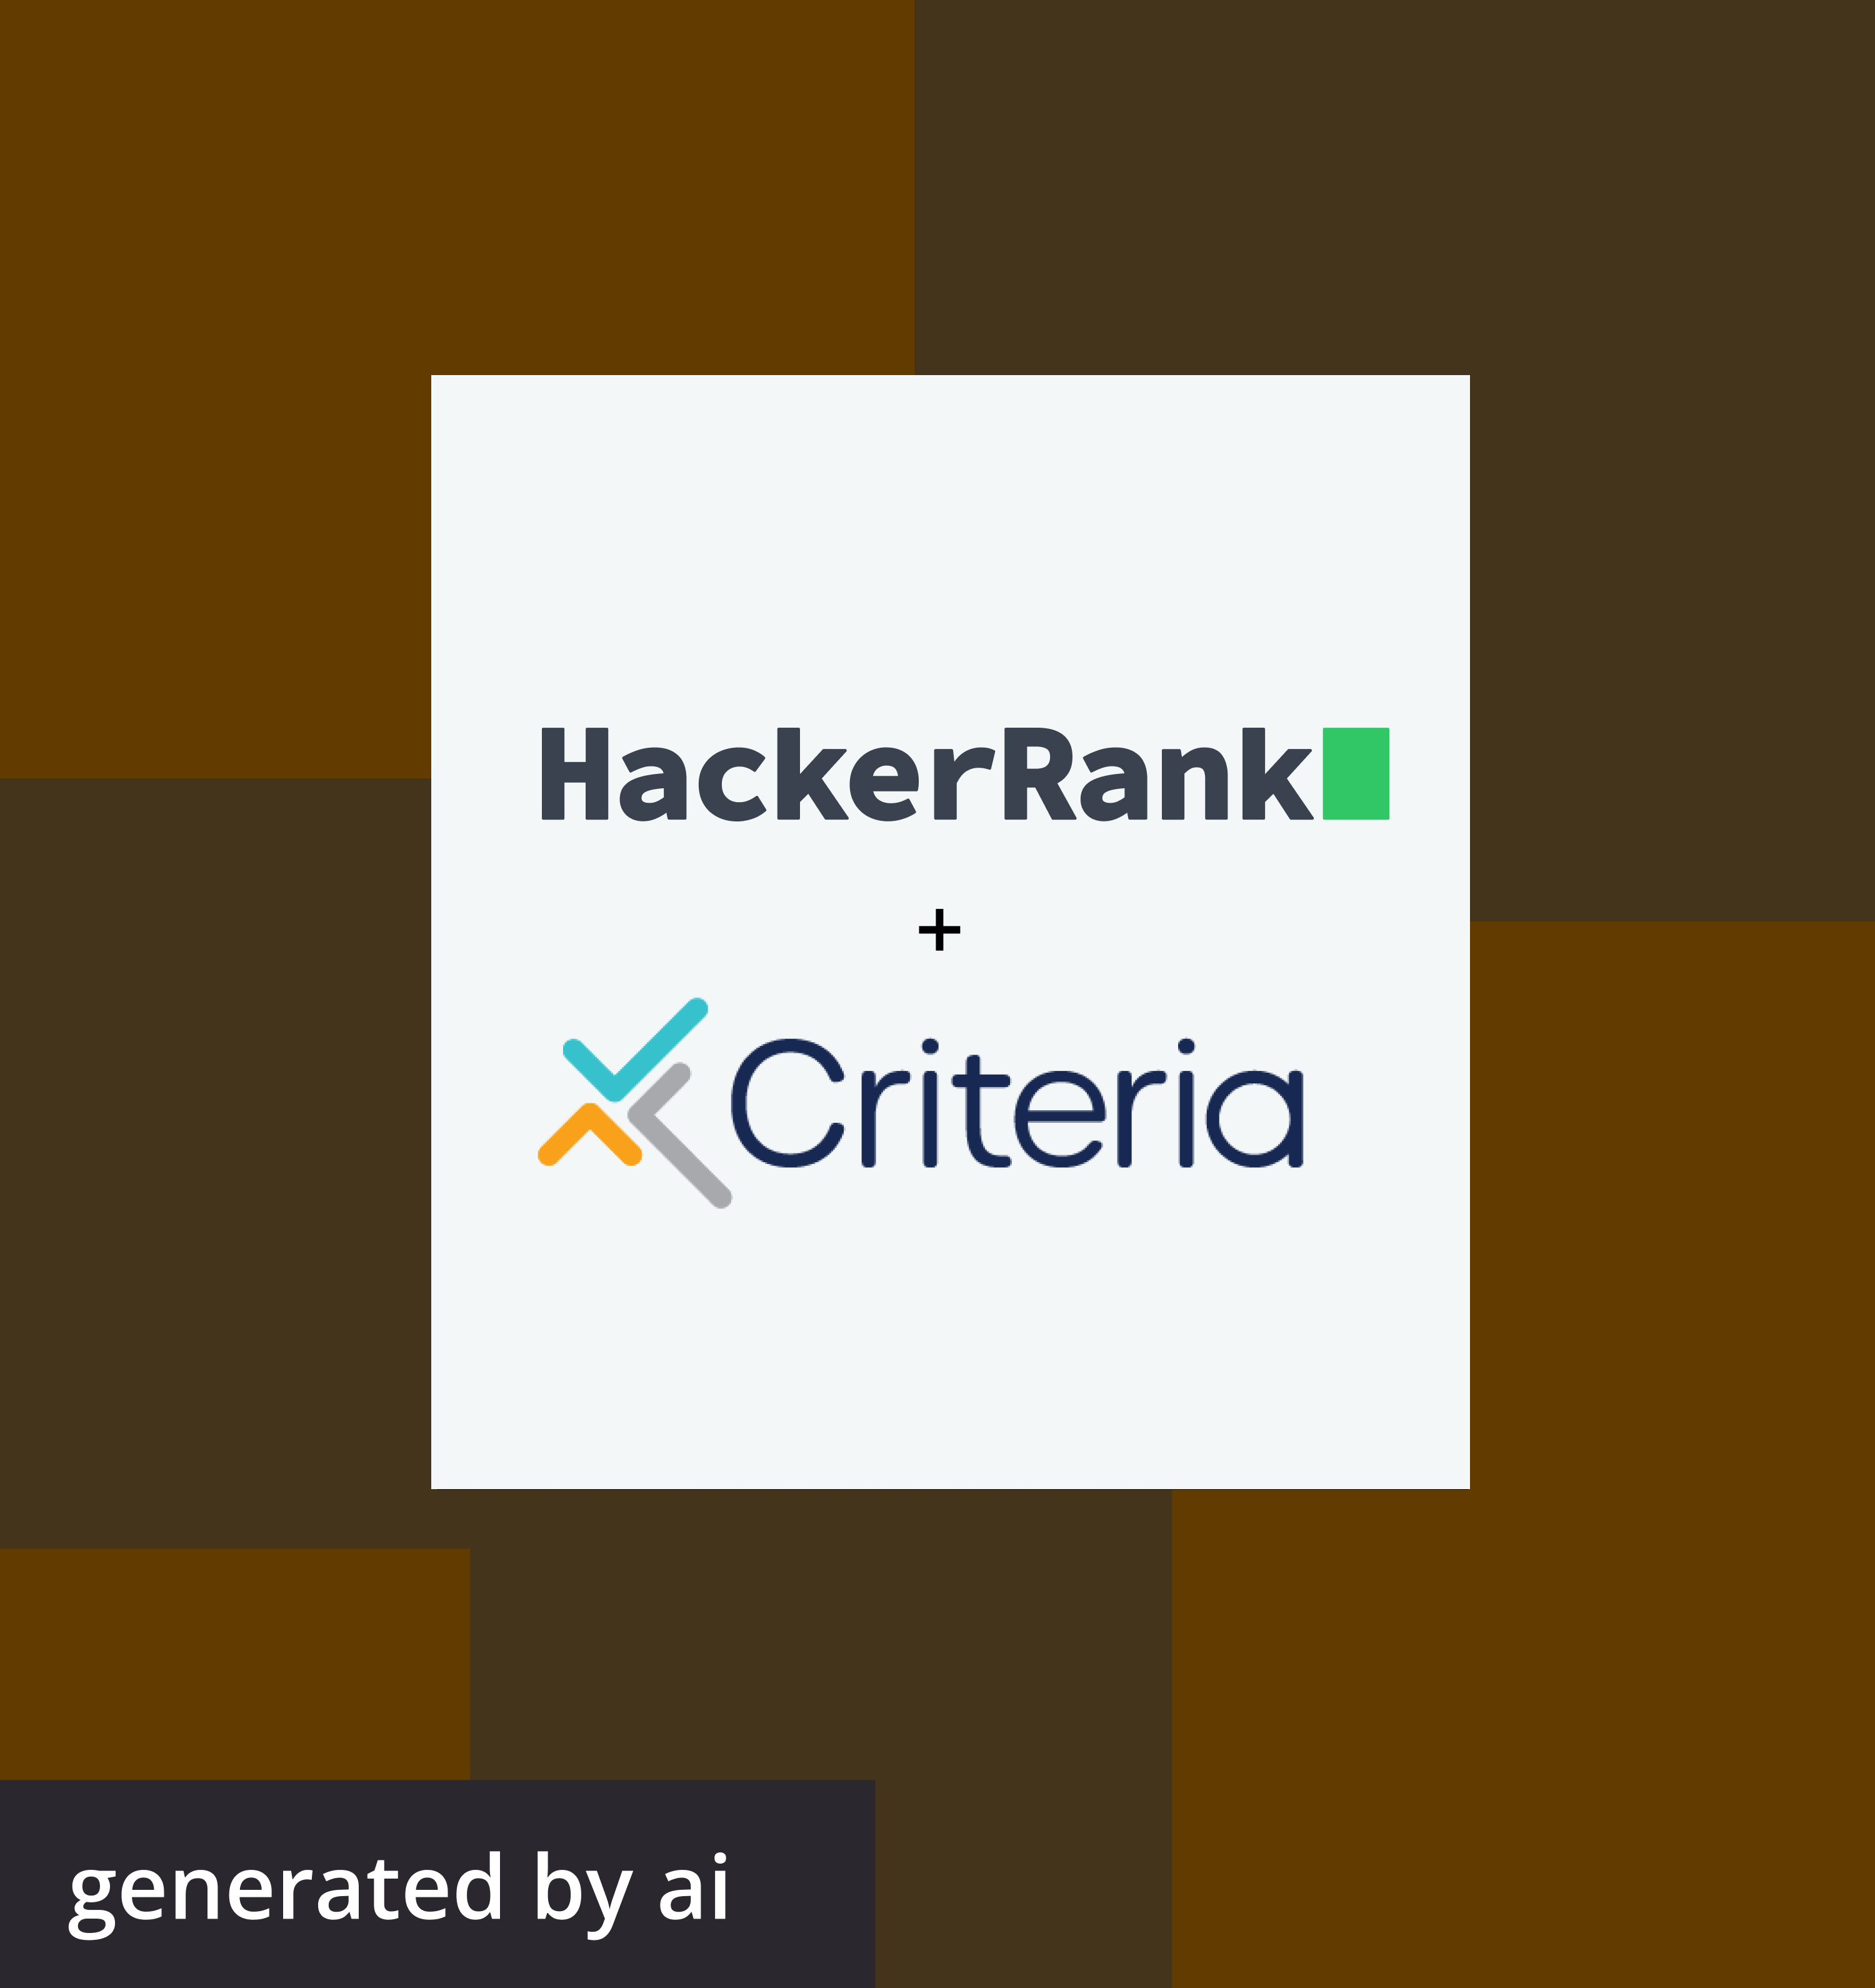 HackerRank and Criteria partnership announcement